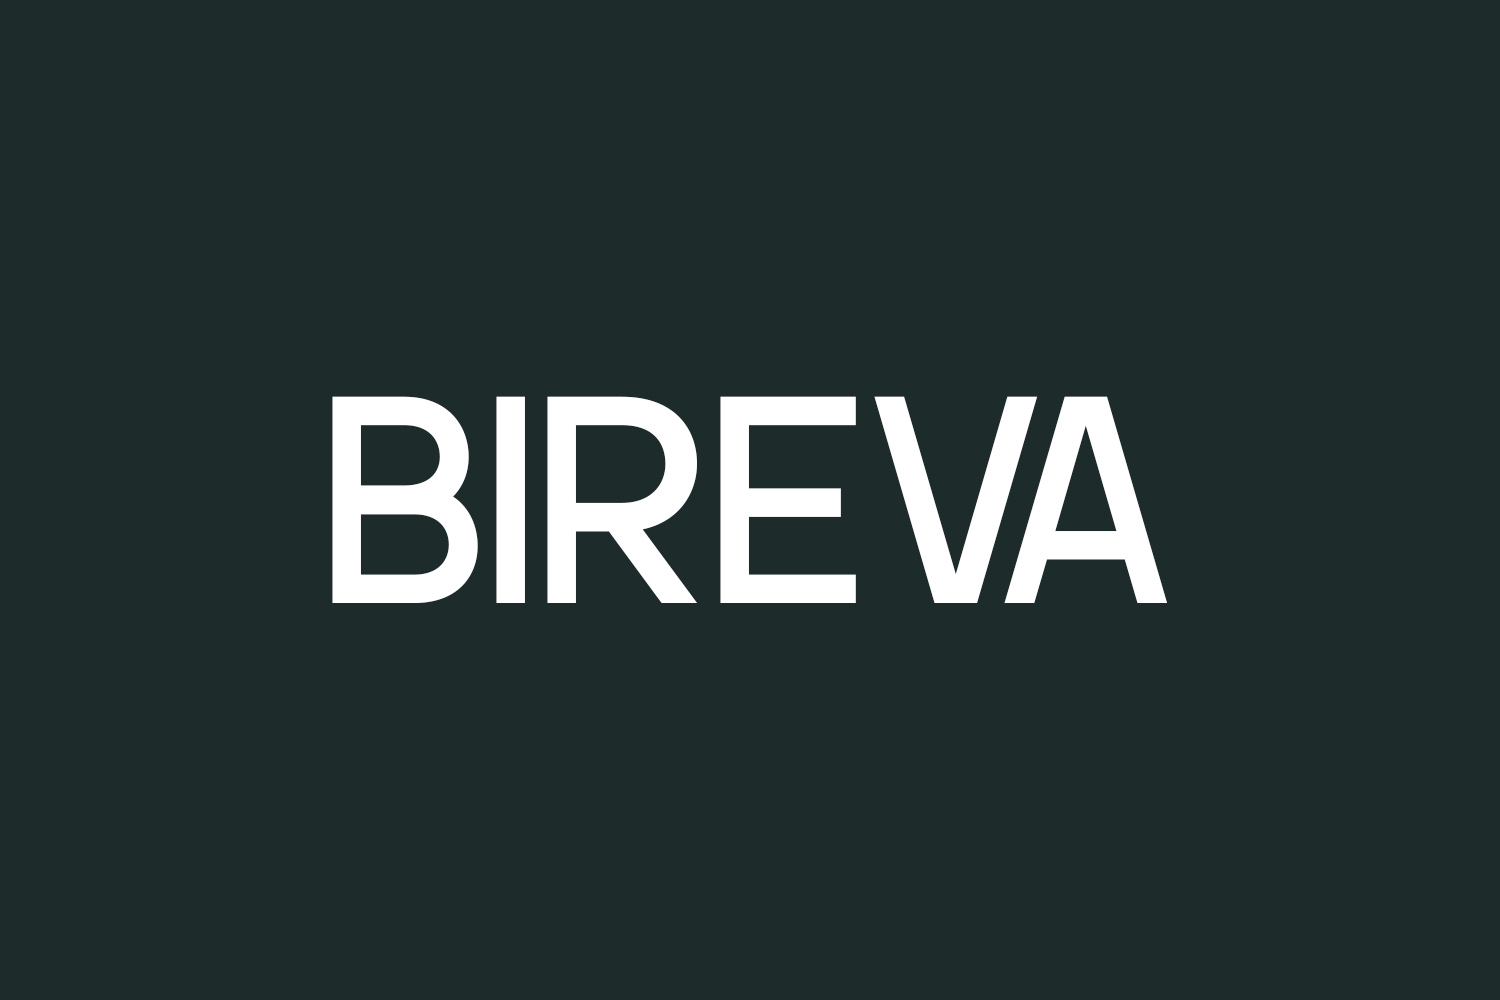 Bireva Free Font